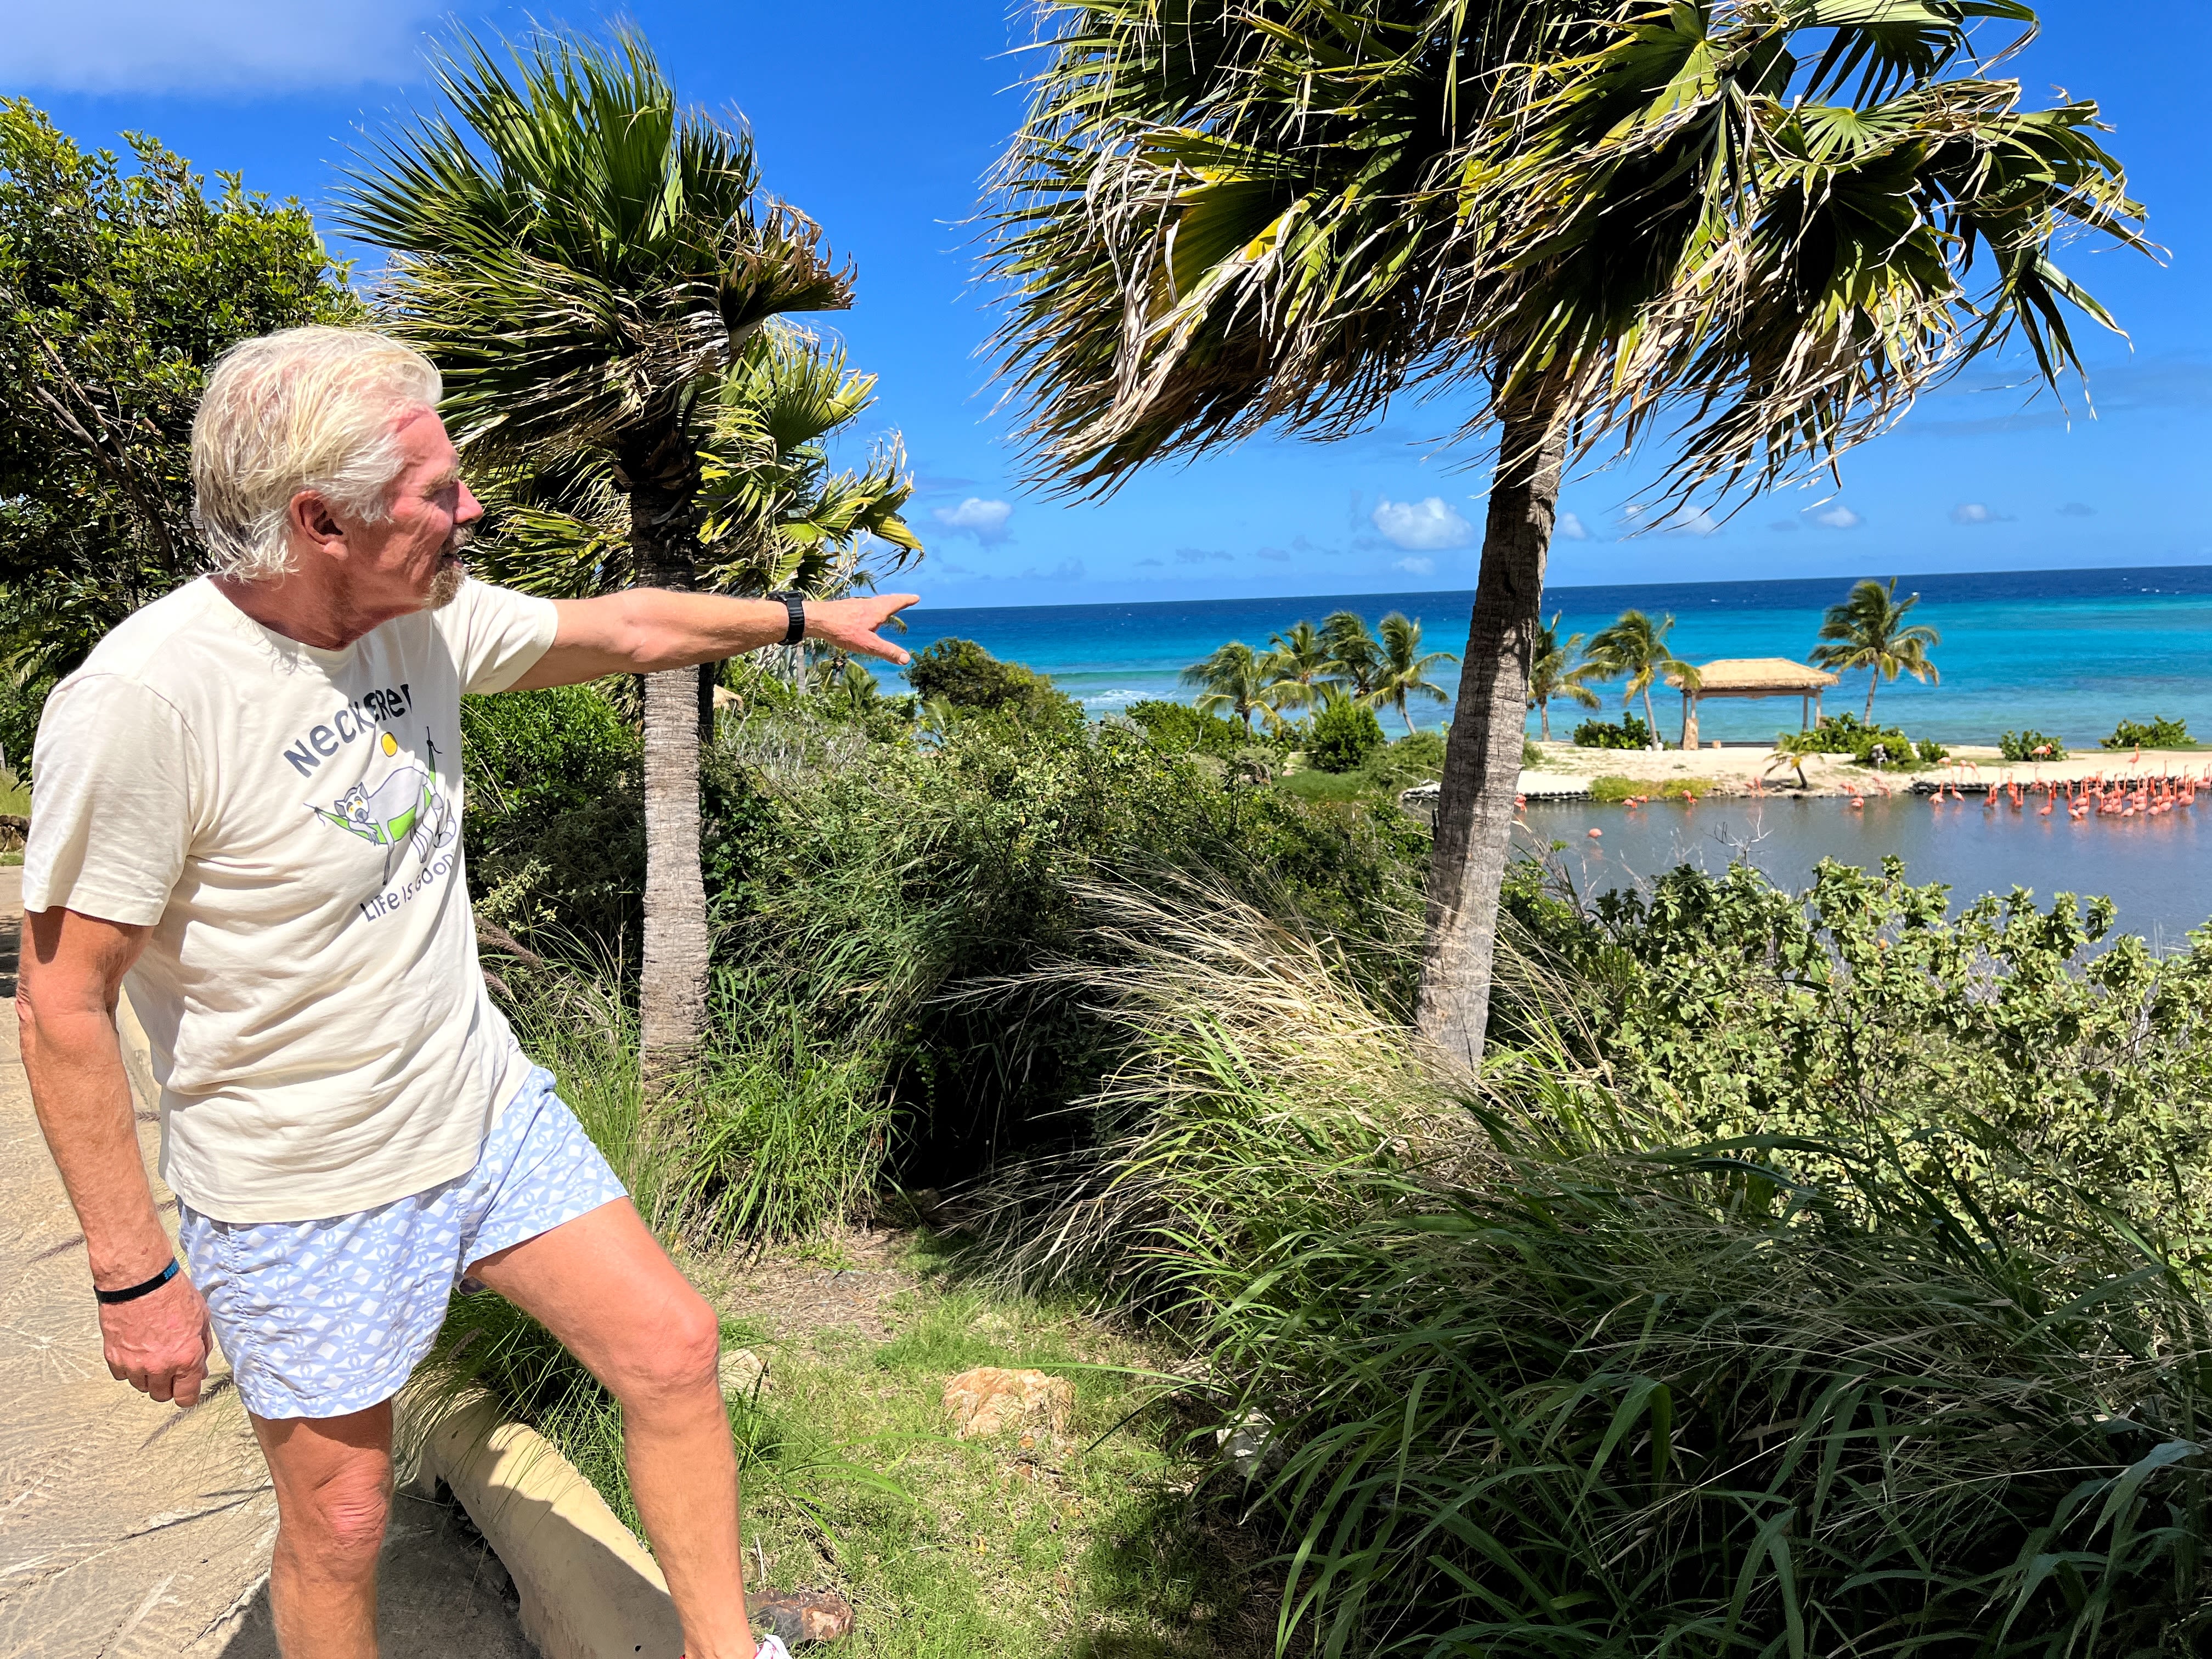 Richard Branson pointing at the flamingos on Necker Island